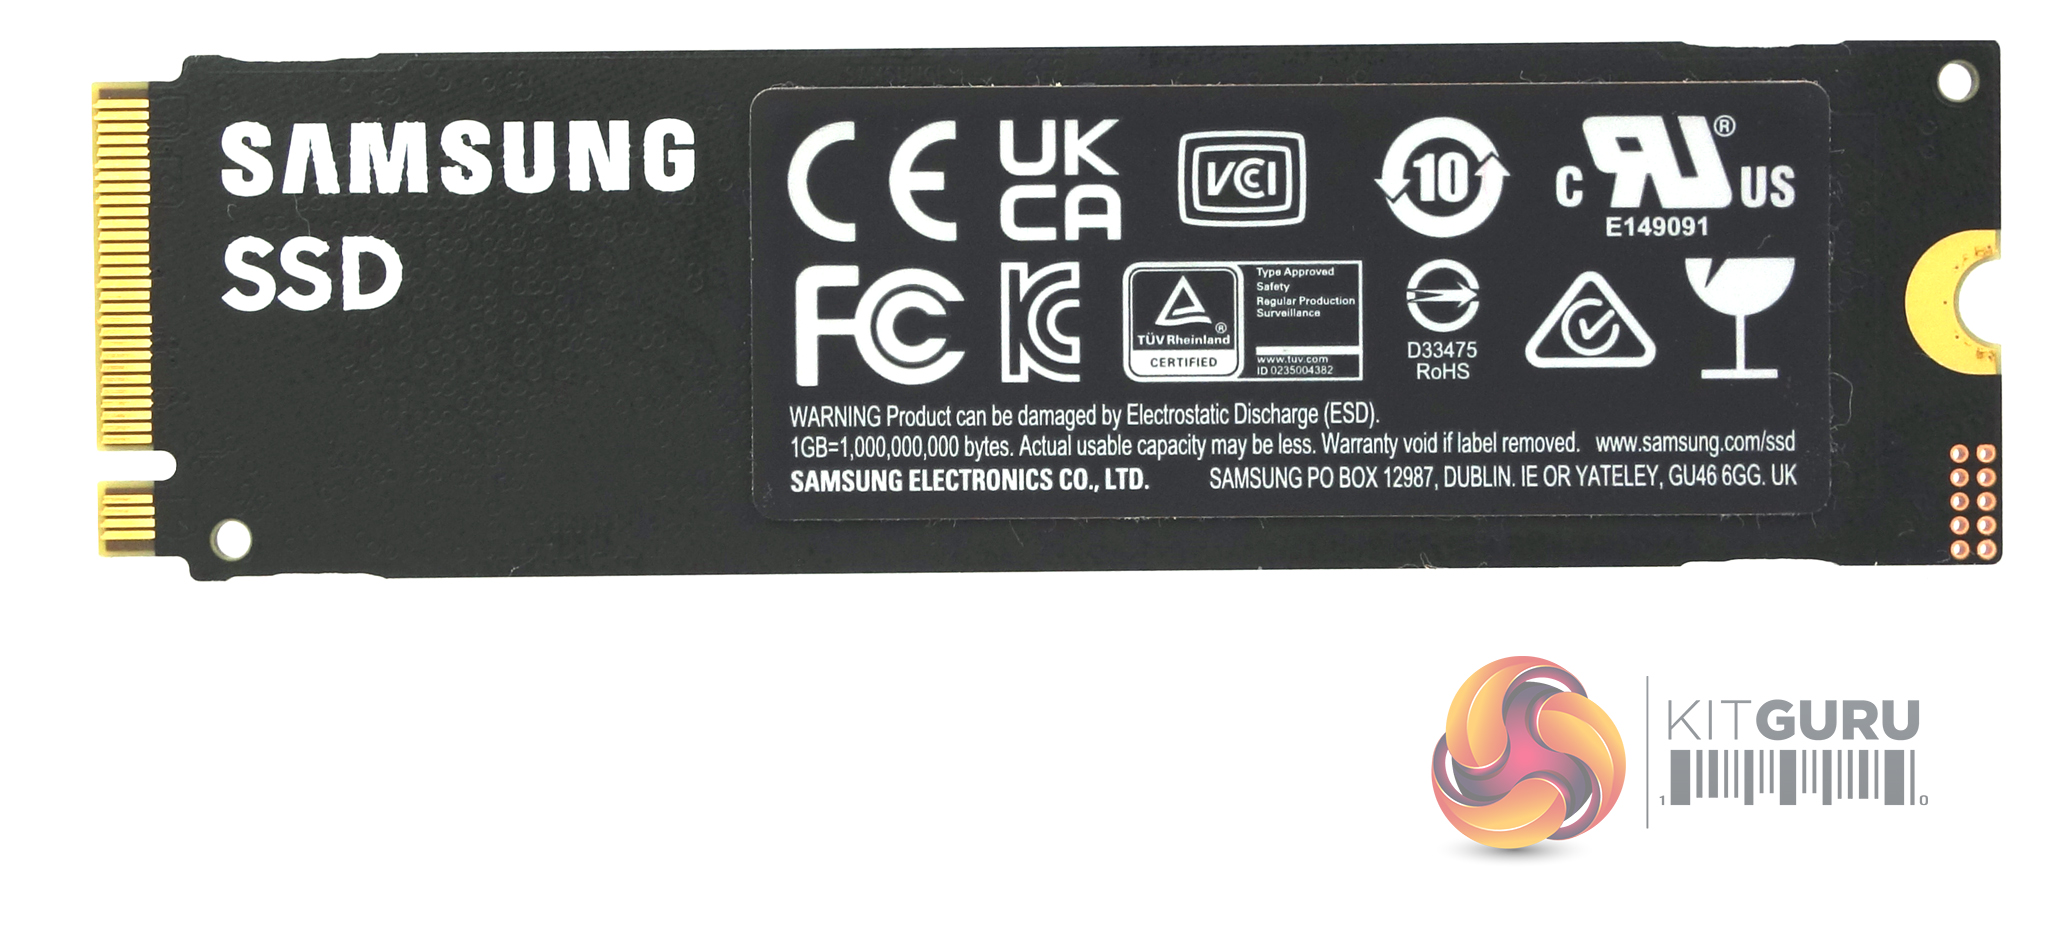 Bon plan] SSD Samsung 990 PRO 2 To à 129,99 € livré ! - Hardware & Co